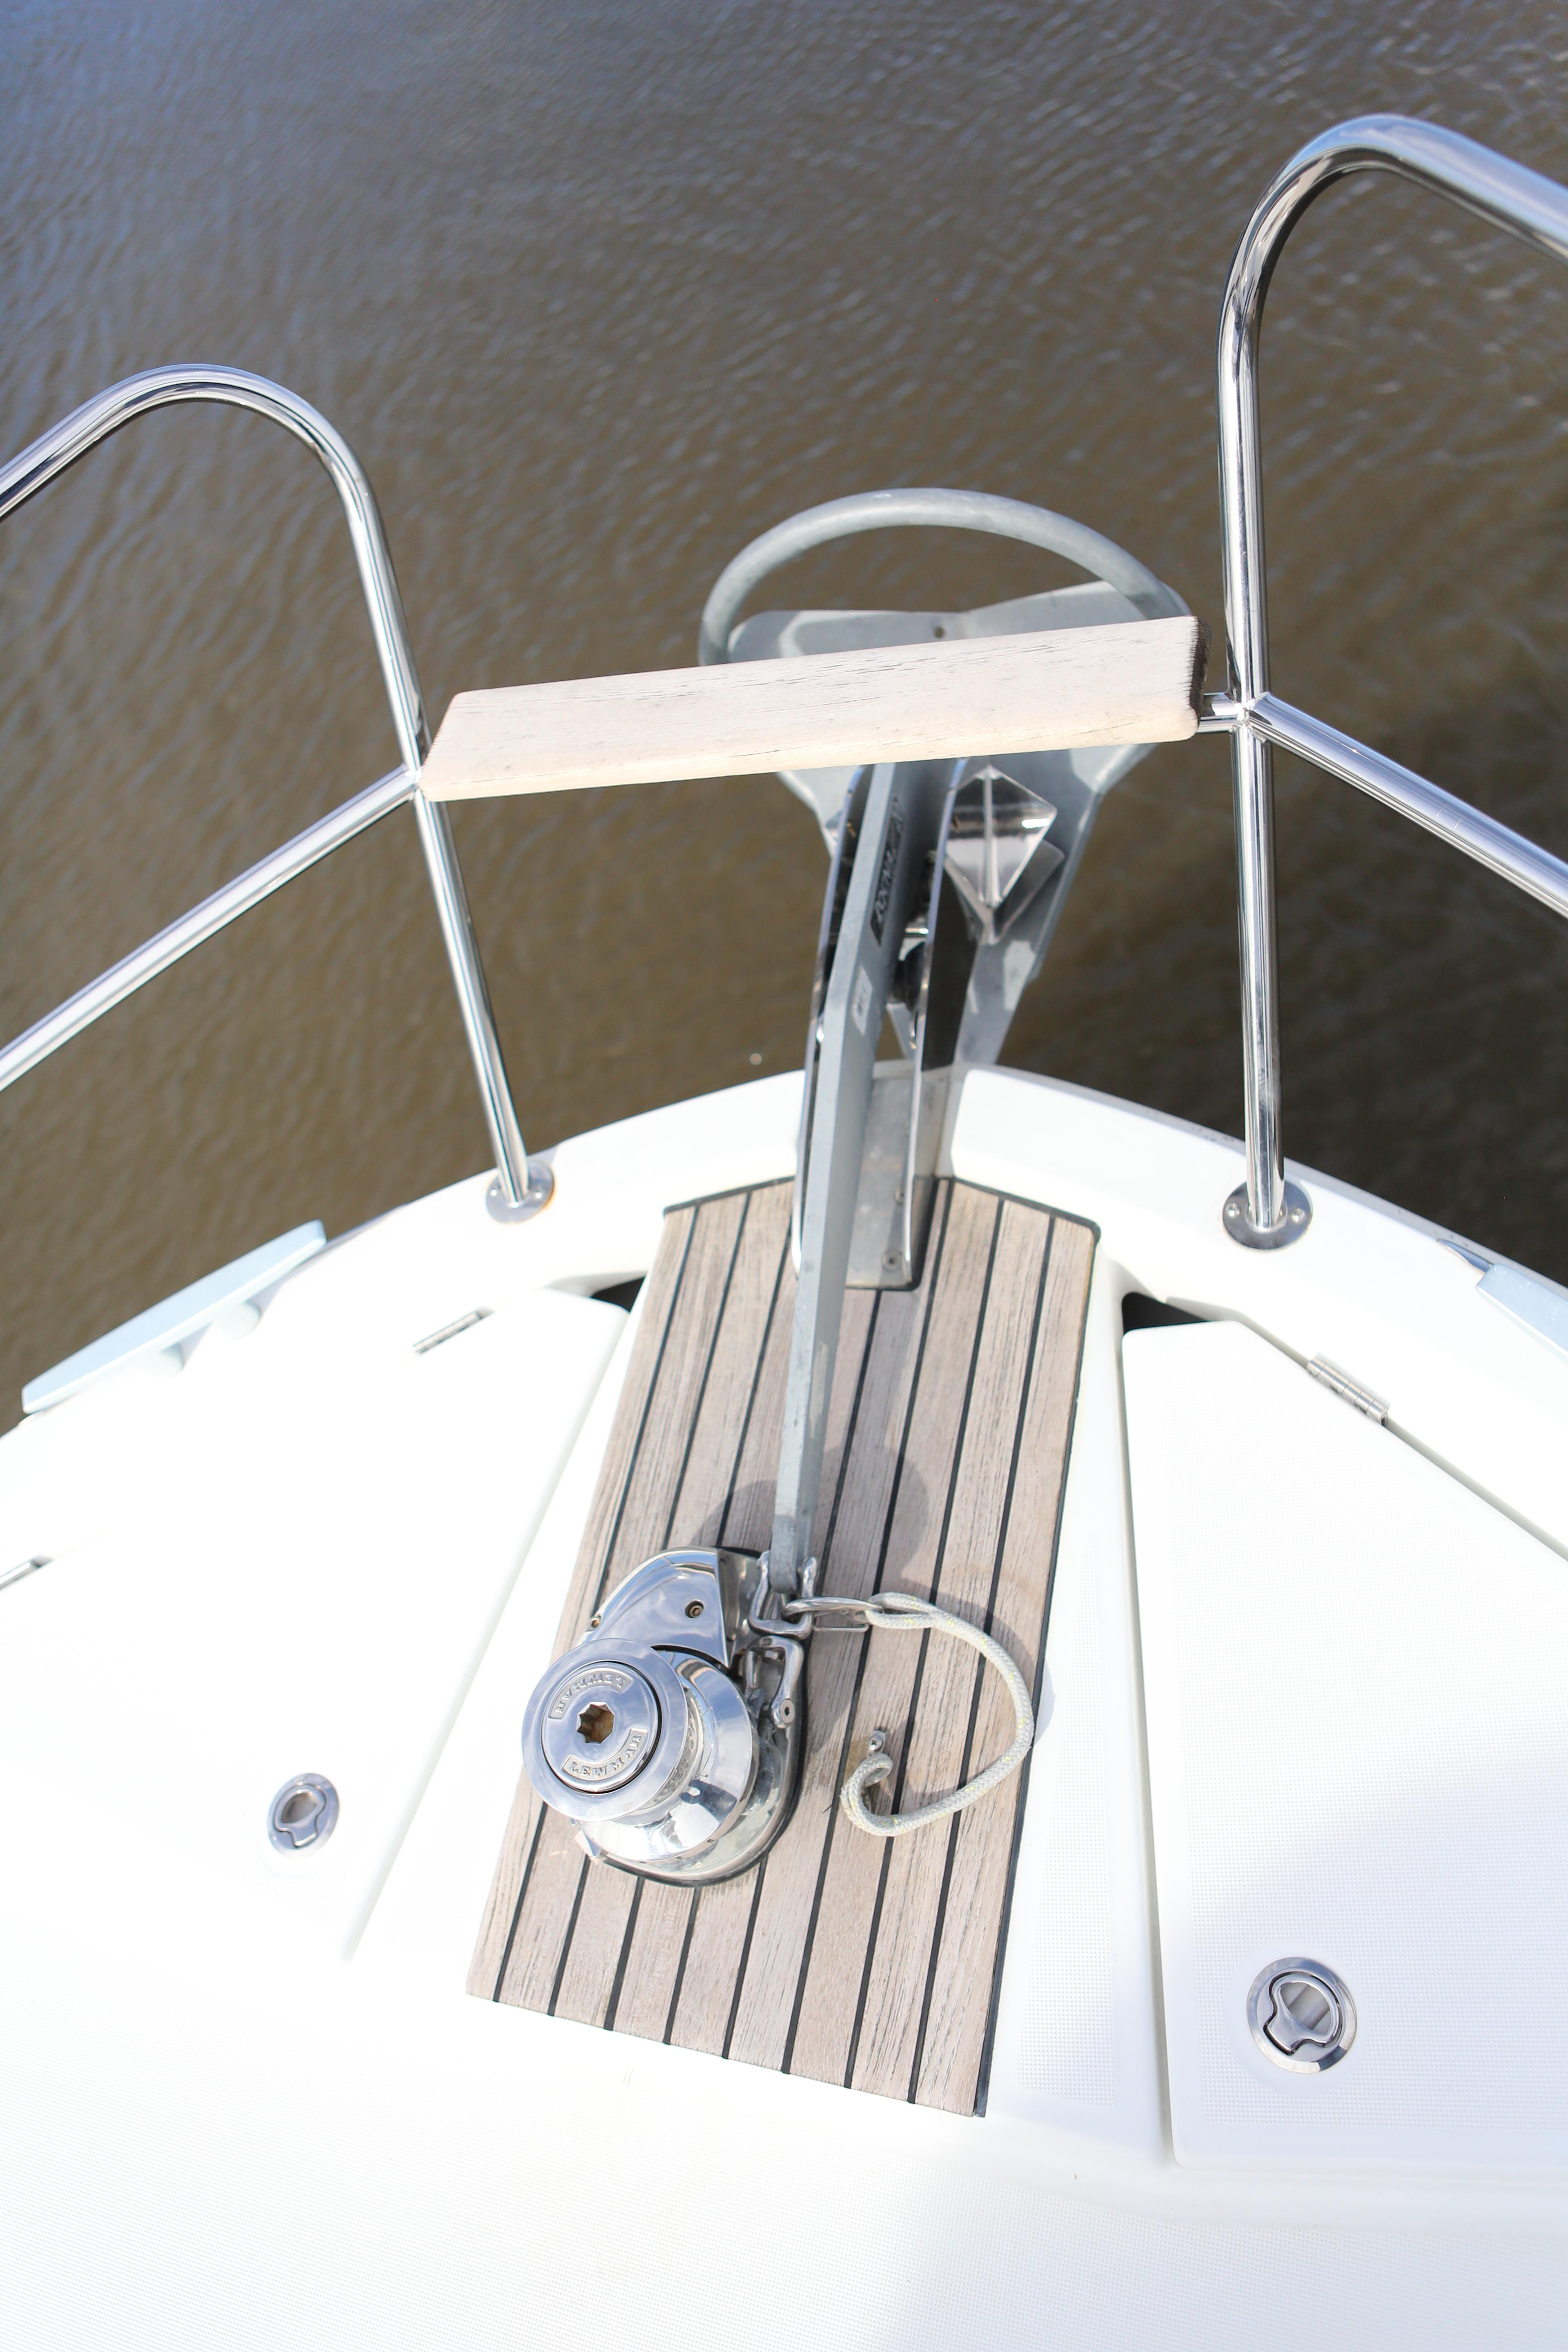 New Rocna 44lb anchor and bridle